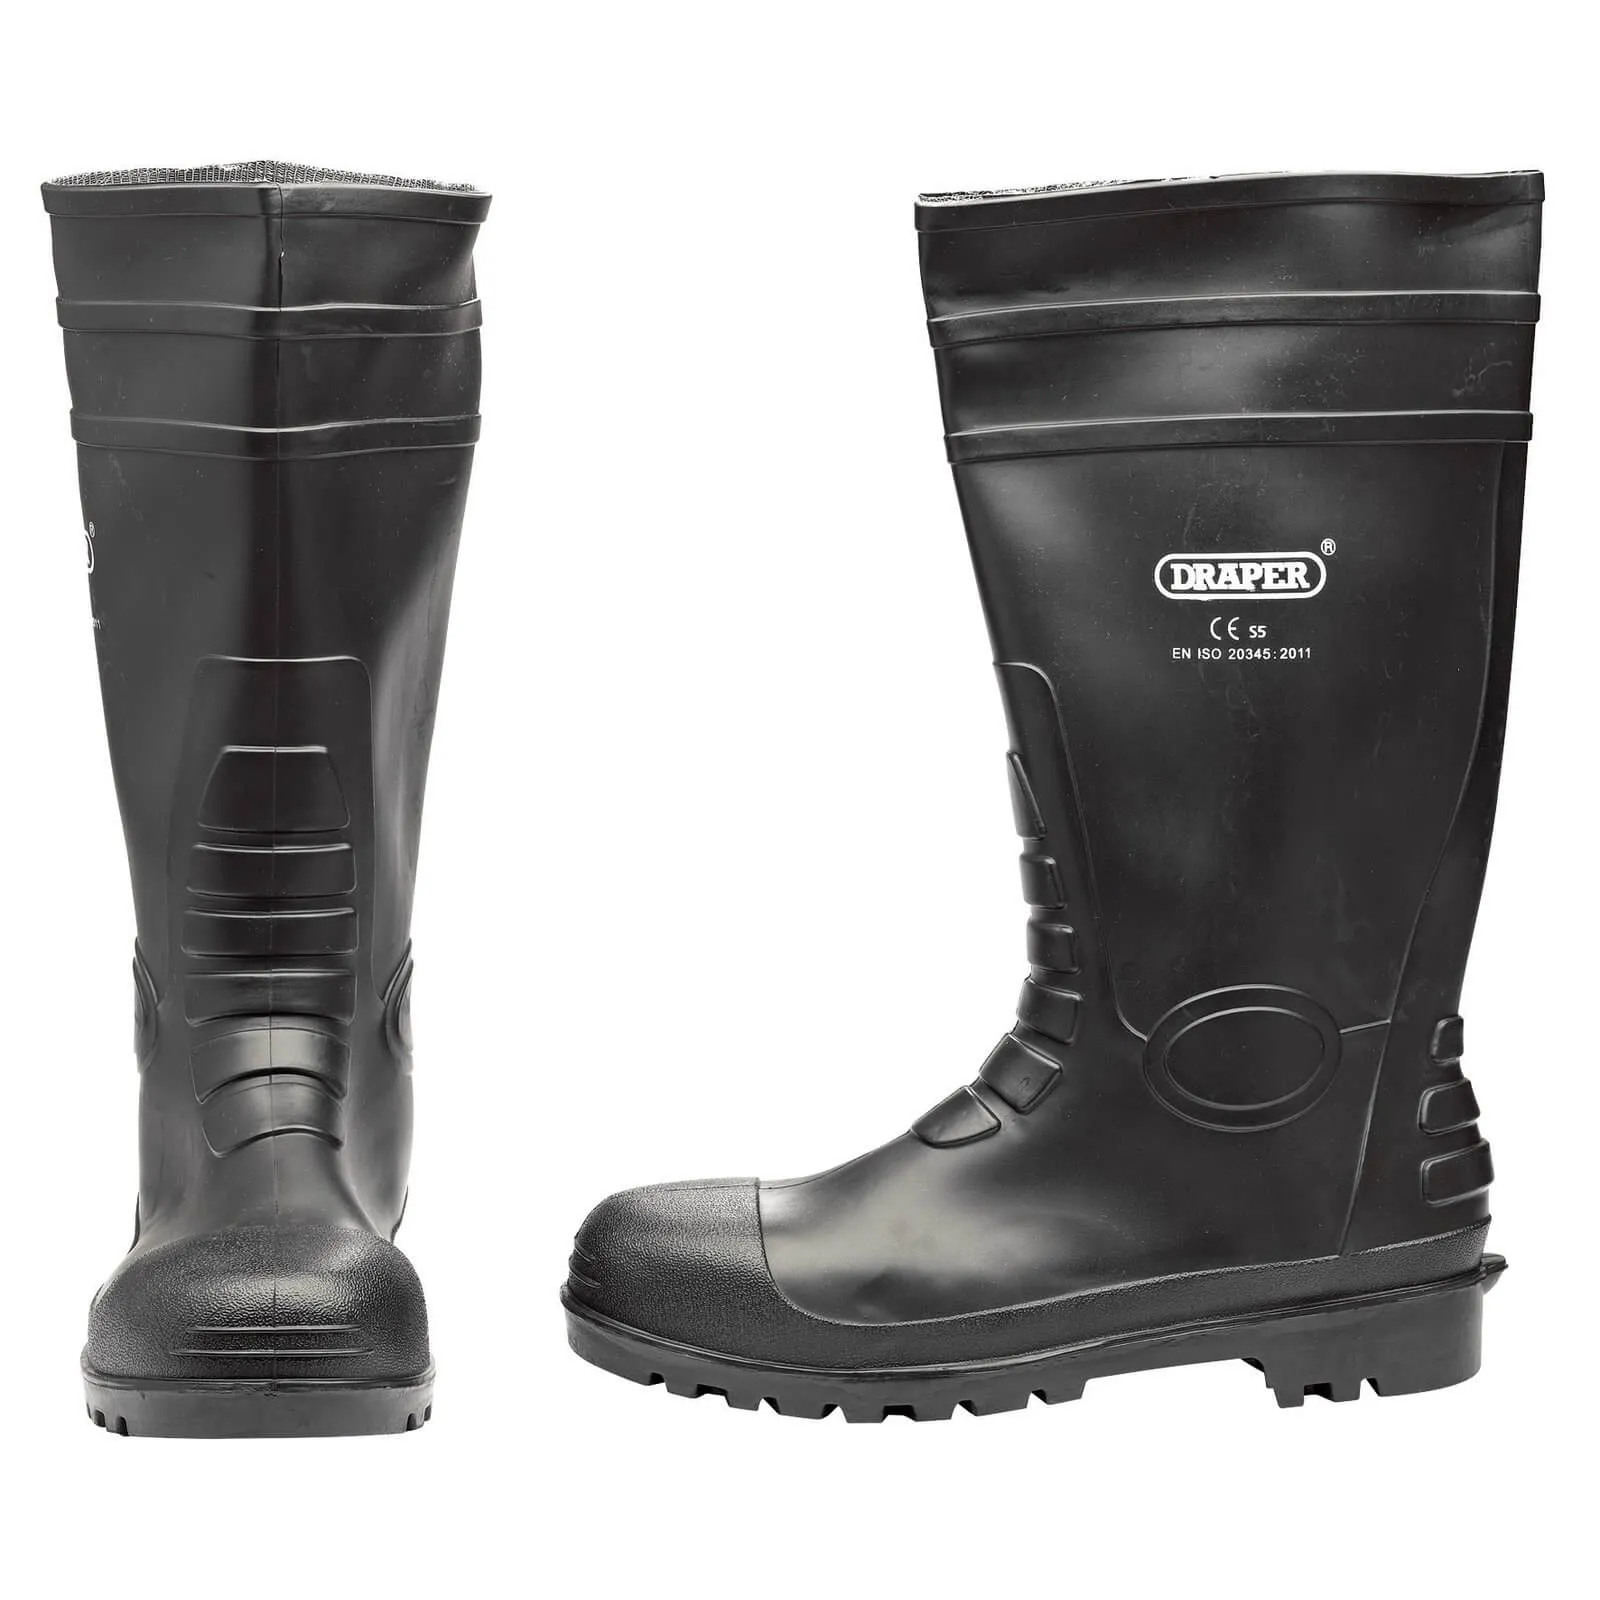 Draper Safety Wellington Boots - Black, Size 10